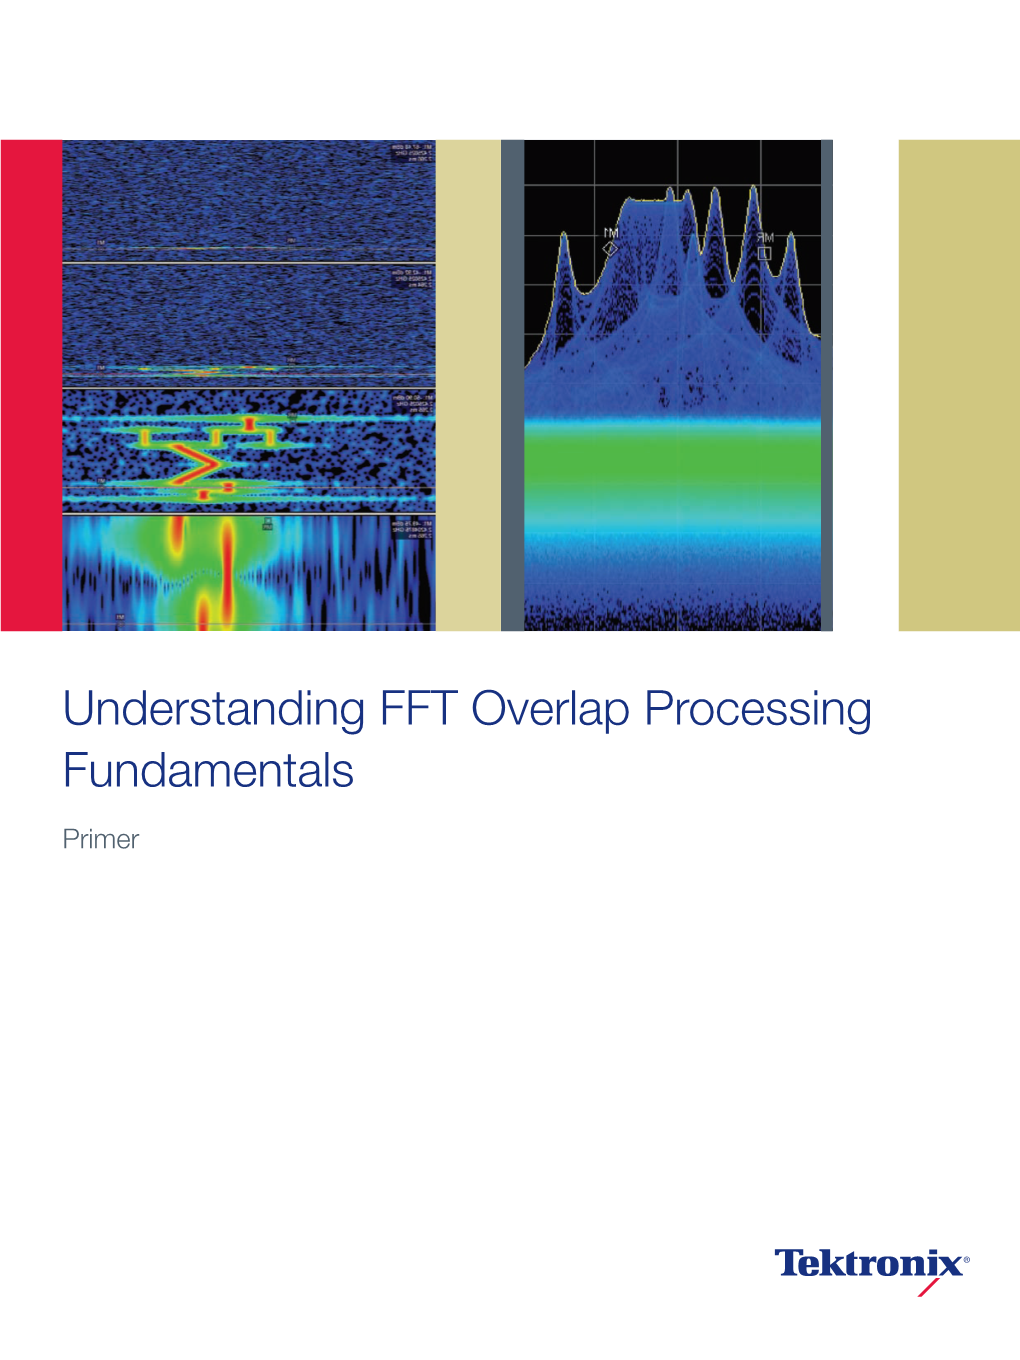 Understanding FFT Overlap Processing Fundamentals